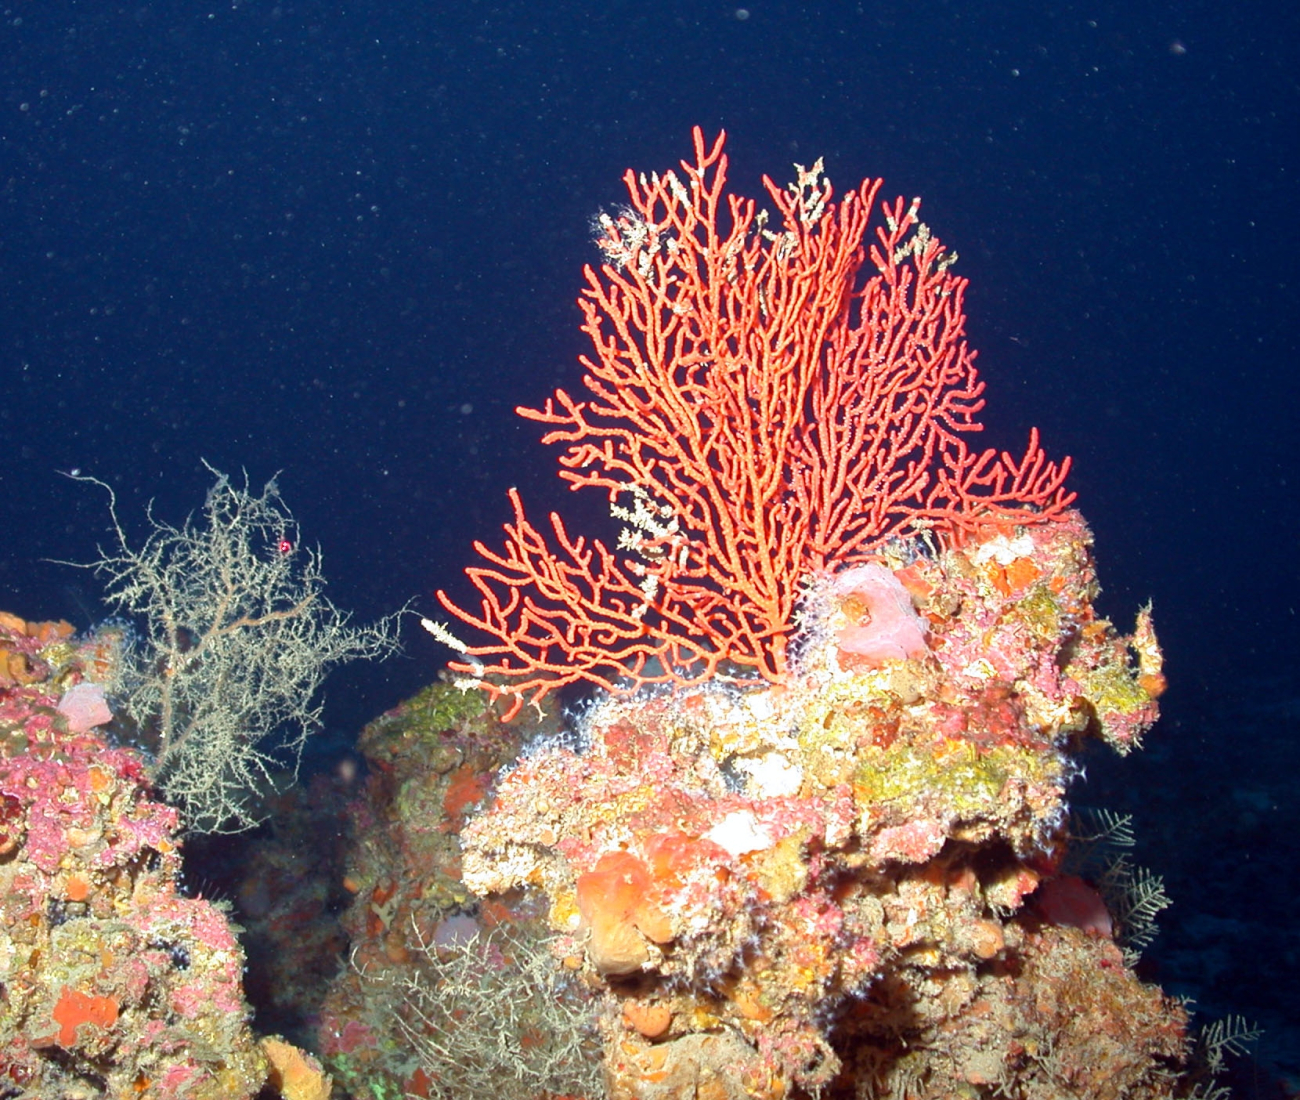 A beautiful red gorgonian fan coral